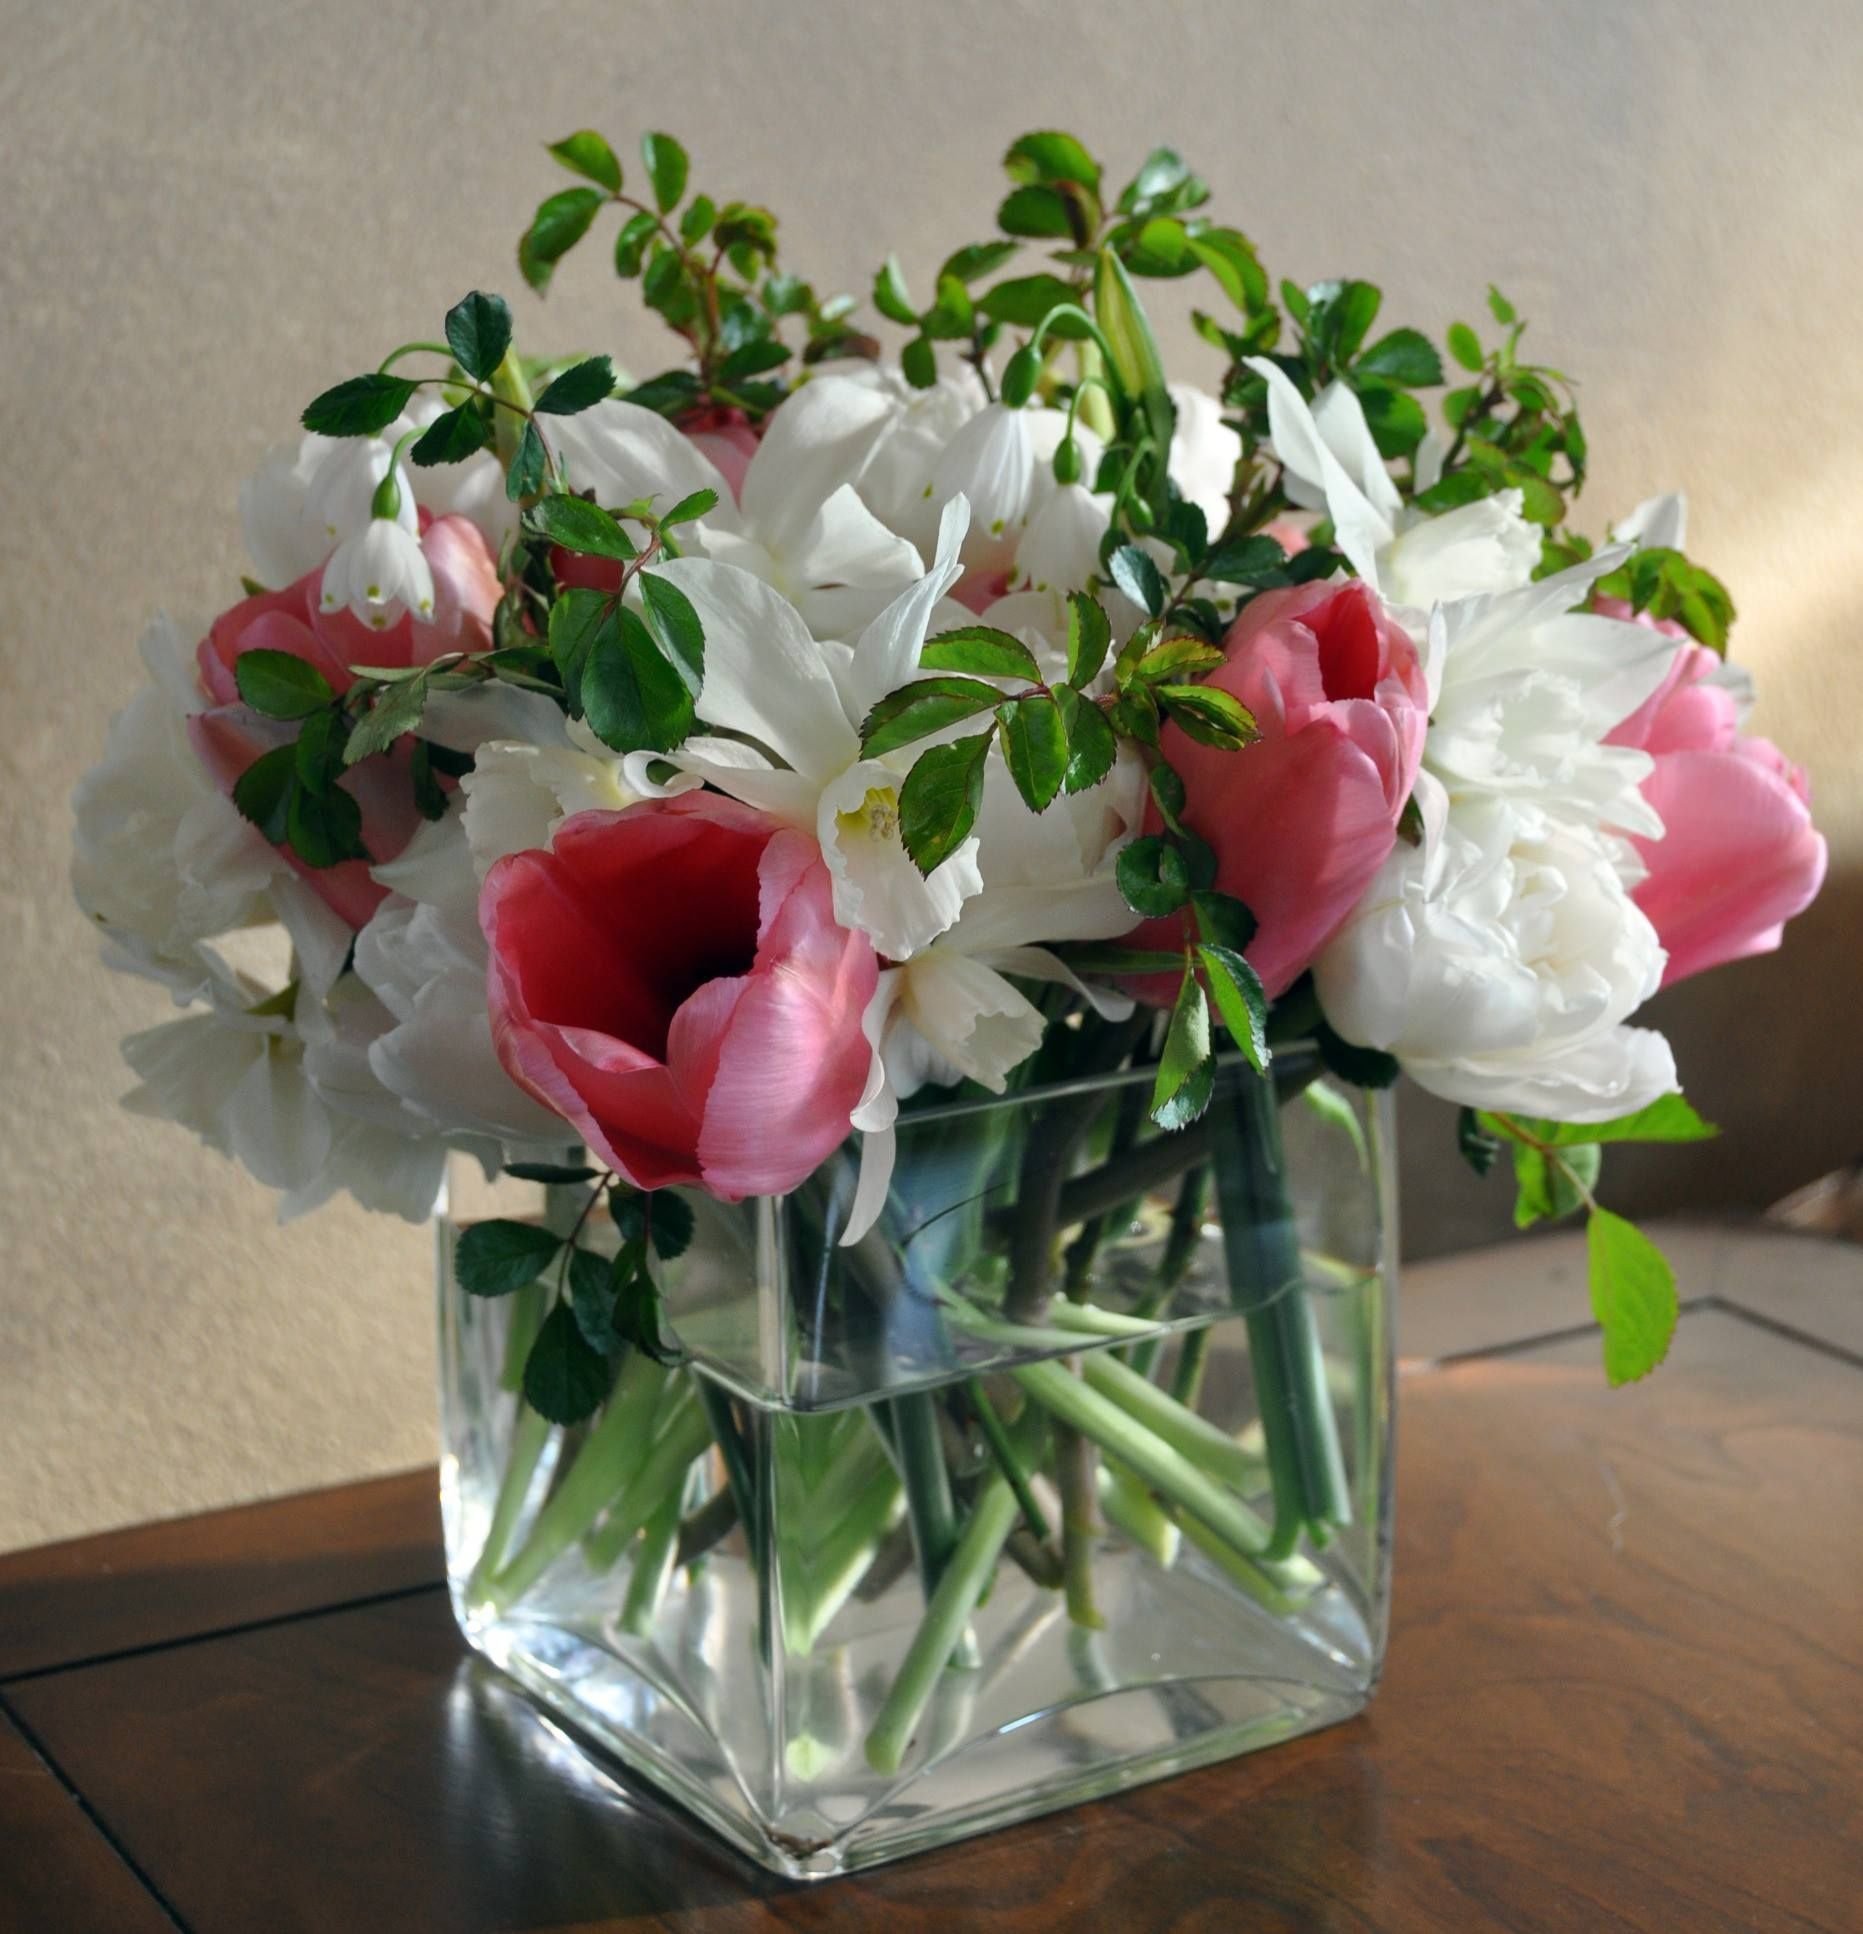 Ваза для живых цветов. Цветы в вазе. Букеты в вазах. Красивый букет в вазе. Красивые цветы в вазах.